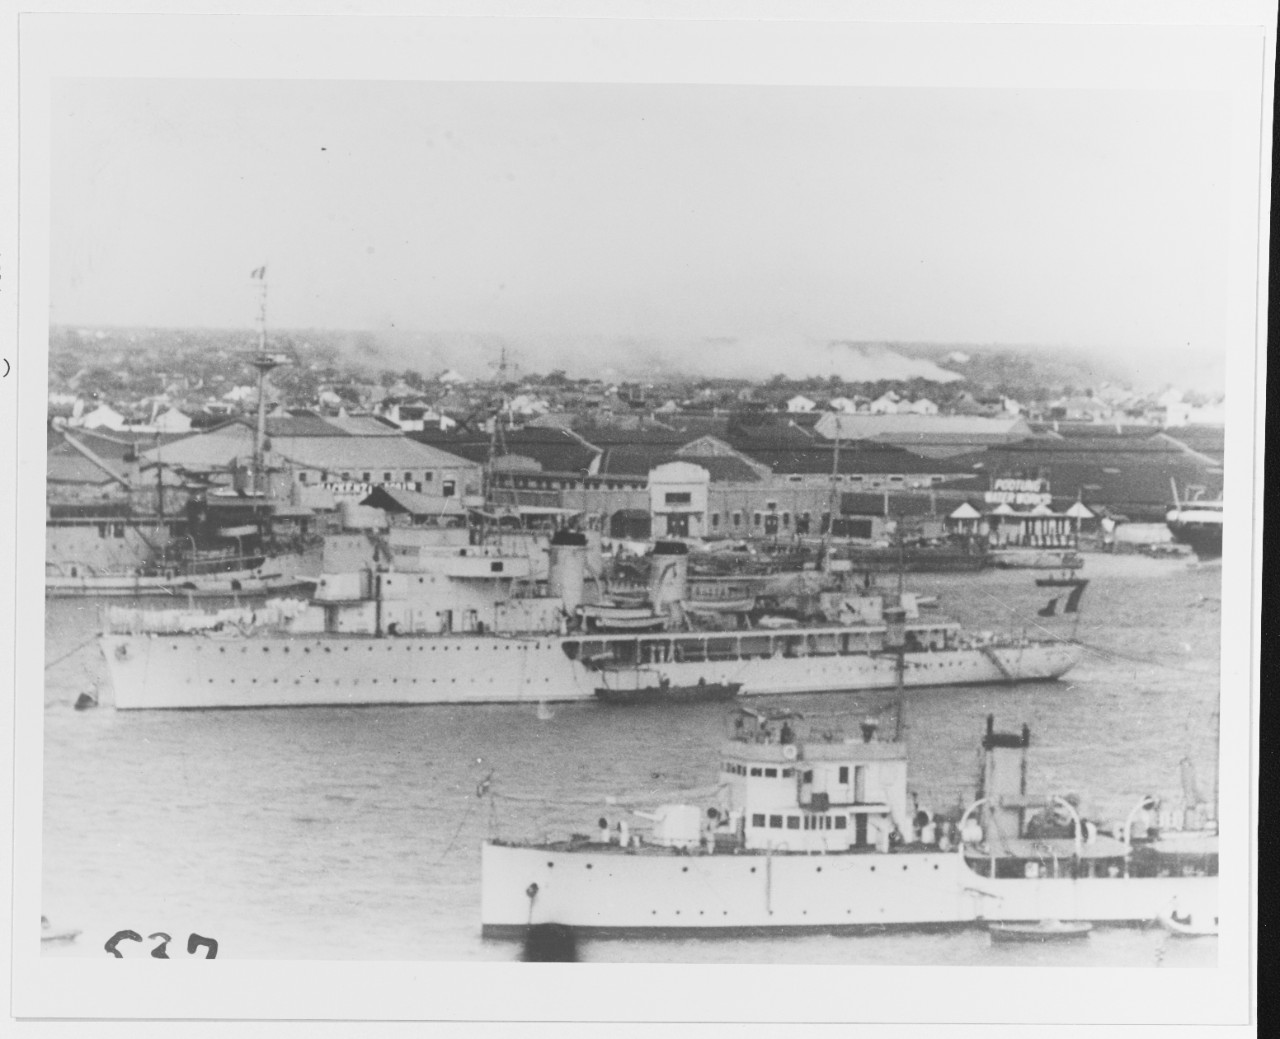 RFS DUMONT D'URVILLE (French colonial sloop, 1932)